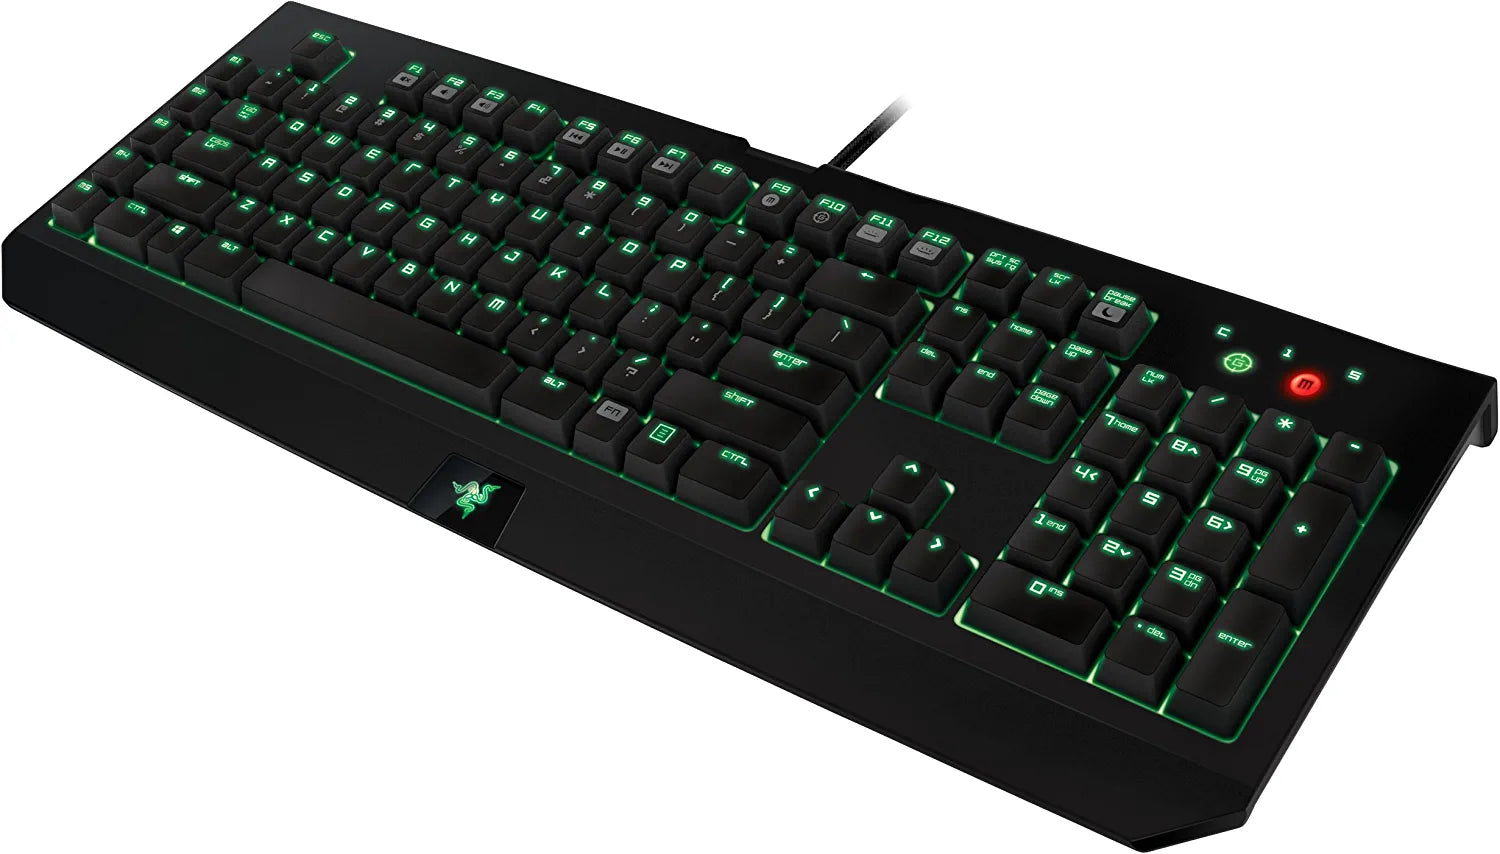 Razer BlackWidow Ultimate Stealth Mechanical Gaming Keyboard 2014 Edition